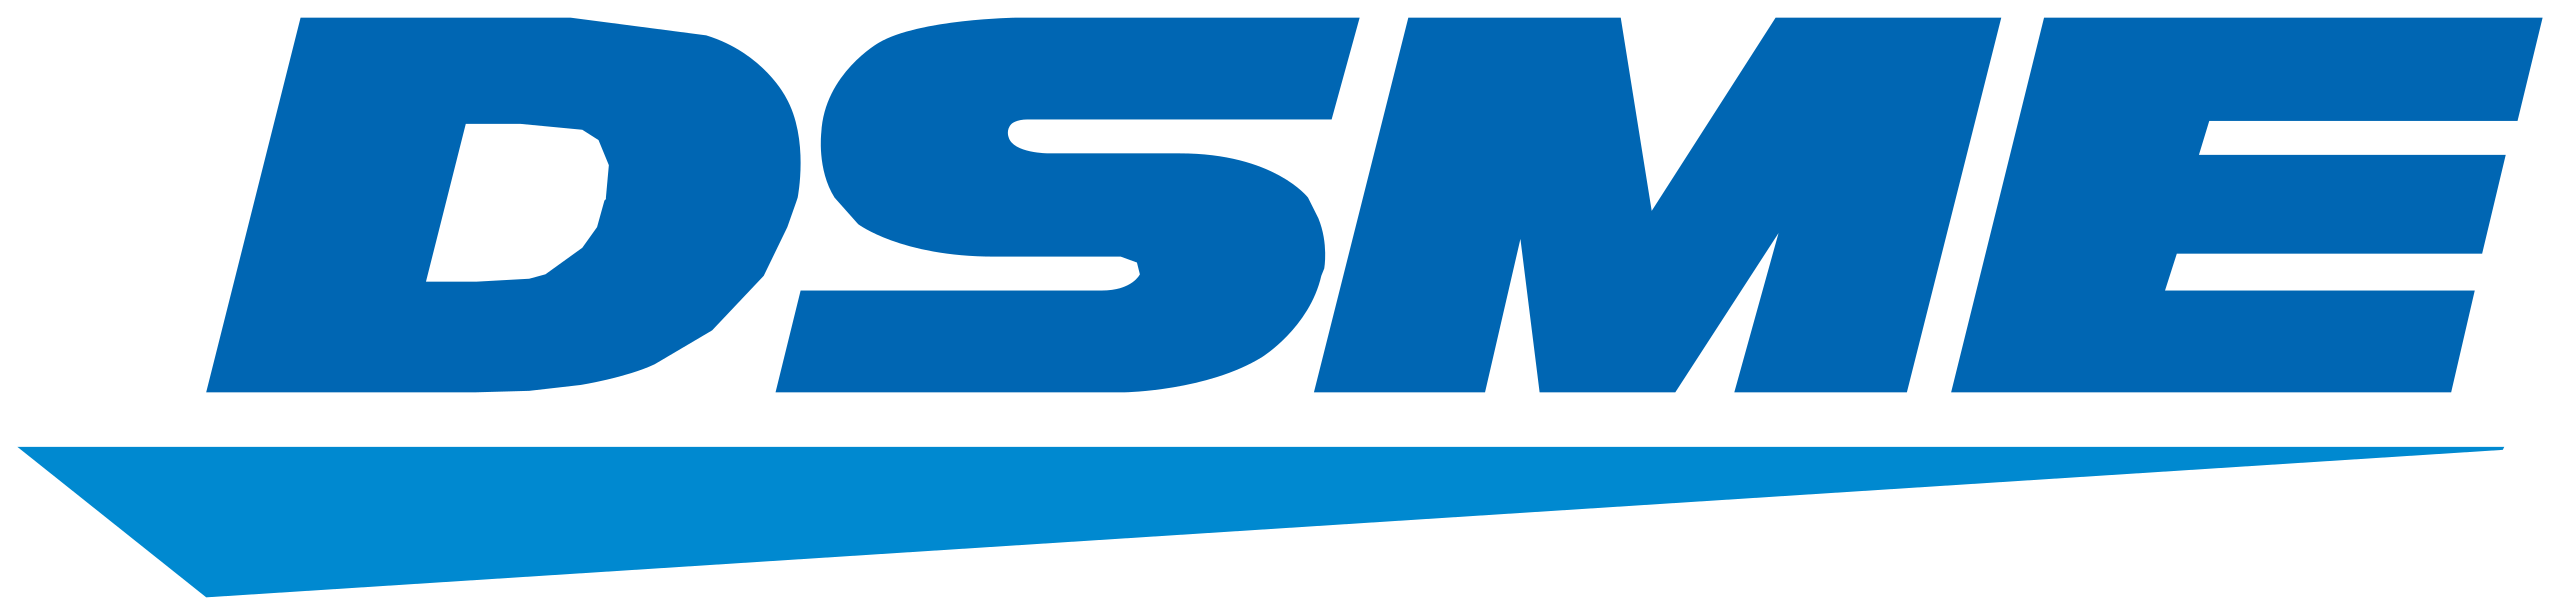 File:Daewoo Shipbuilding & Marine Engineering logo.svg - Wikimedia Commons